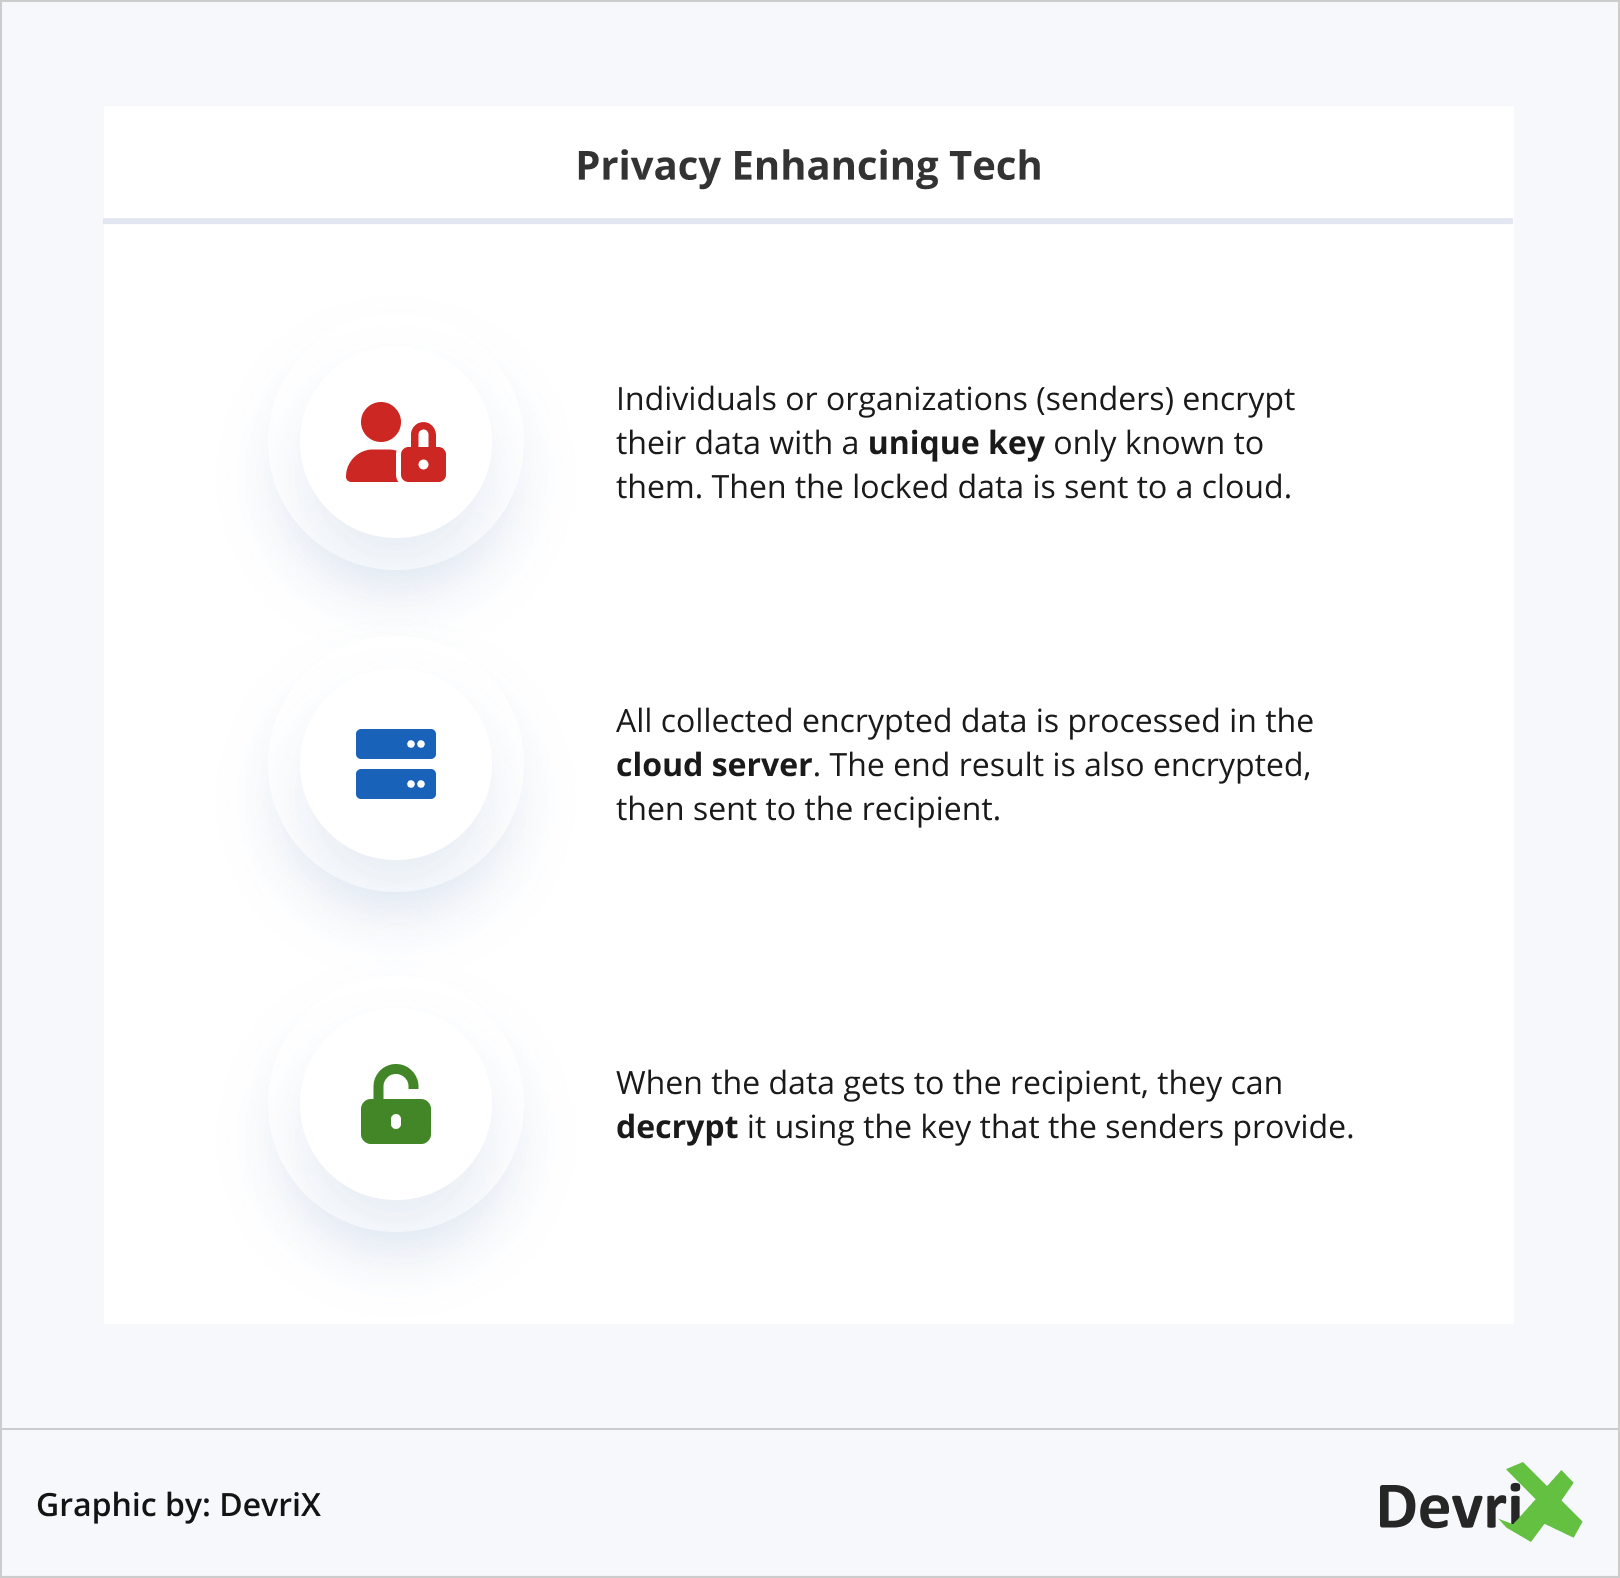 Privacy Enhancing Tech